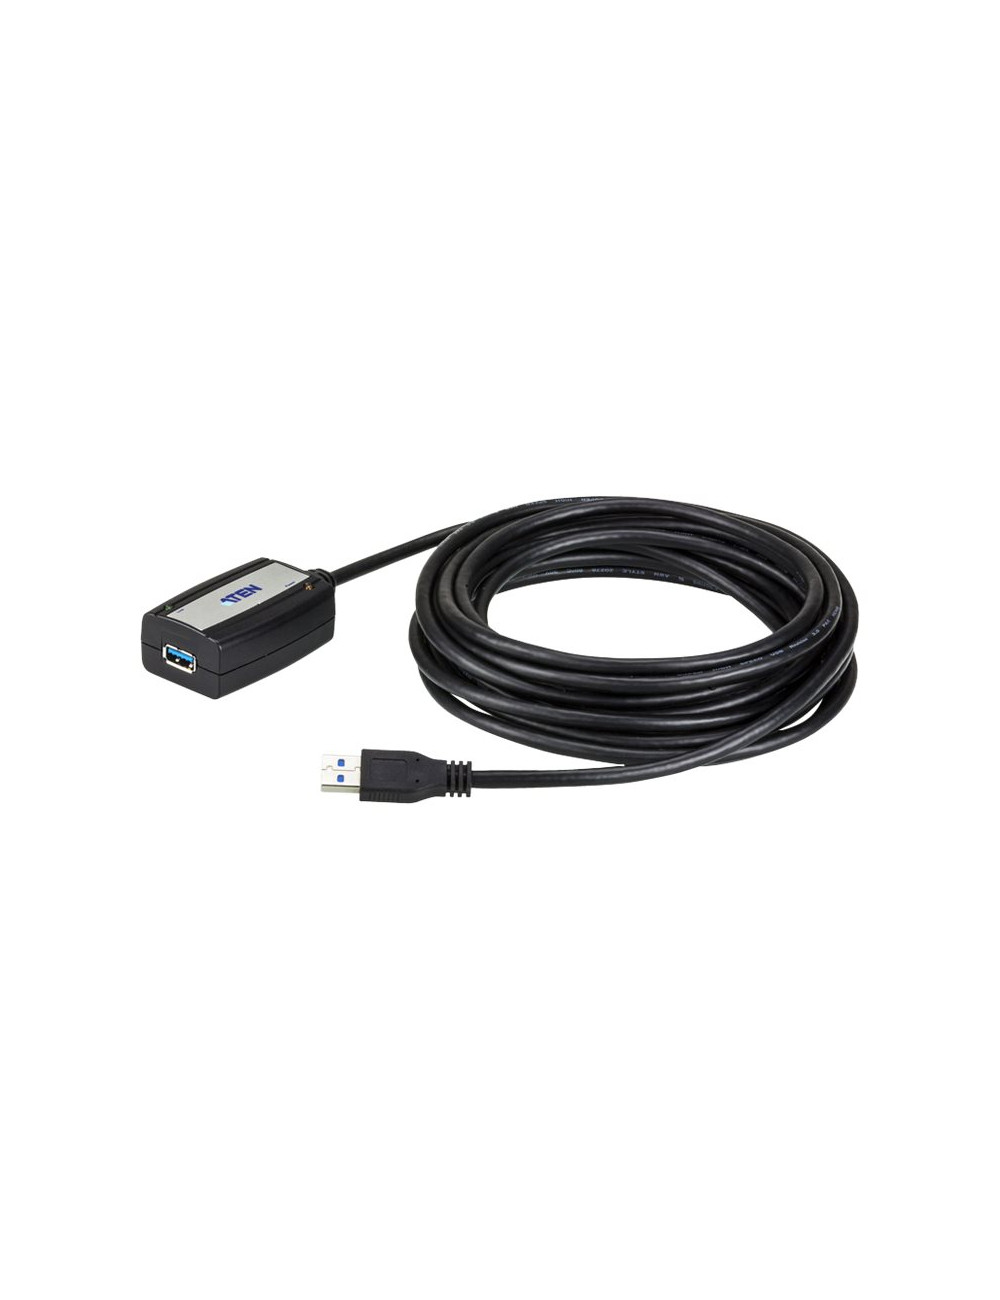 Aten UE350A-AT 5m USB 3.1 Gen1 Extender Cable | Aten